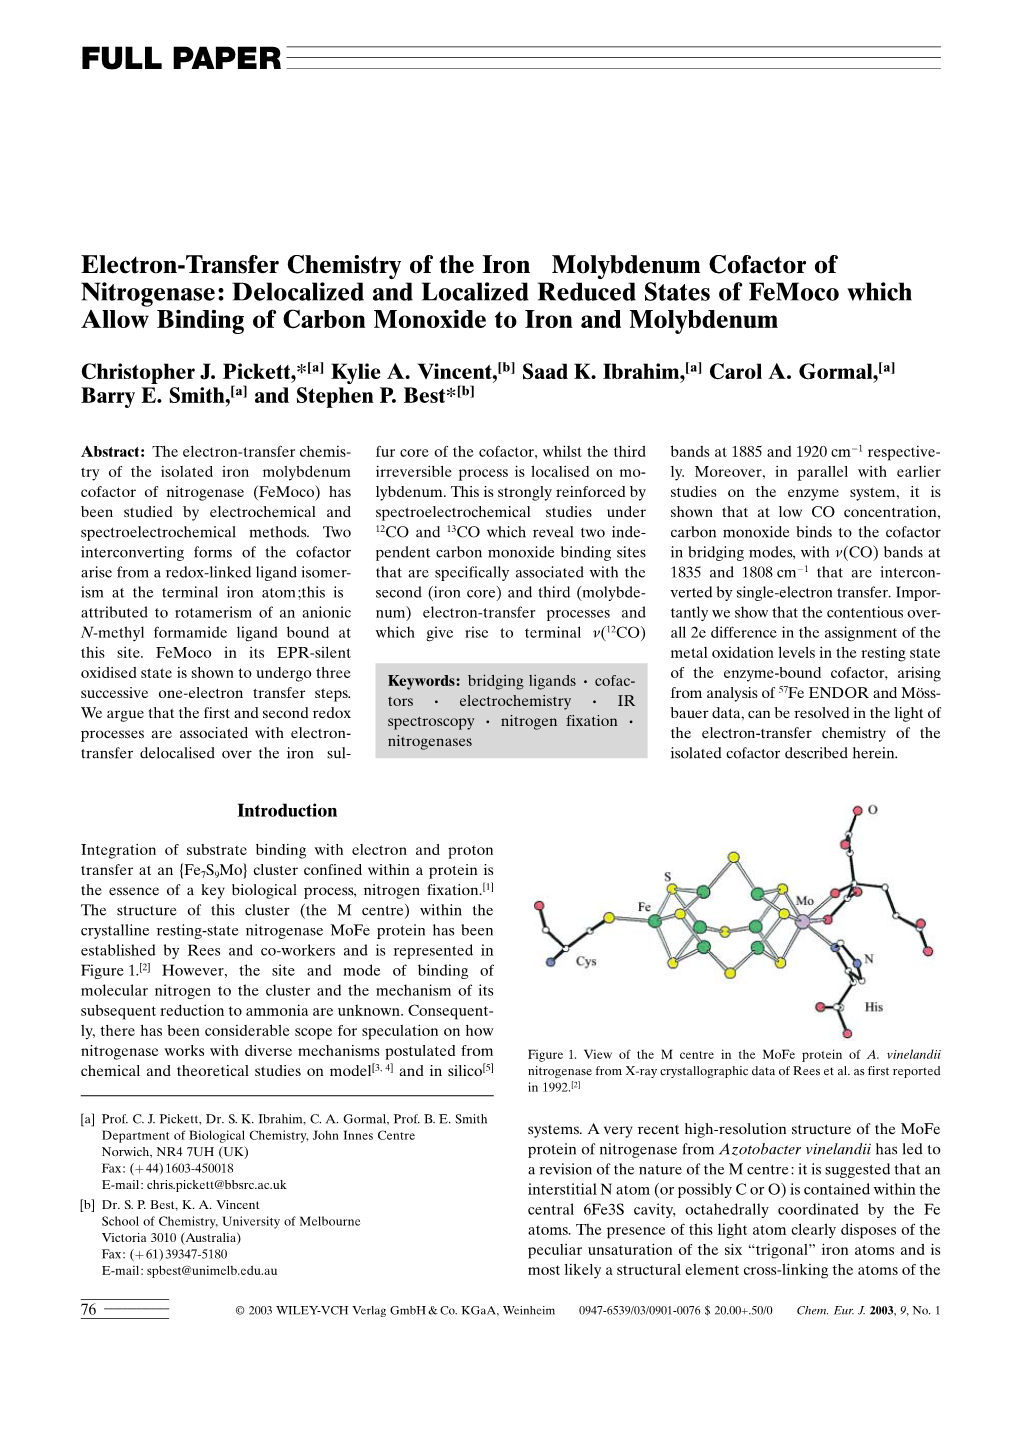 Electron-Transfer Chemistry of the Iron-Molybdenum Cofactor Of